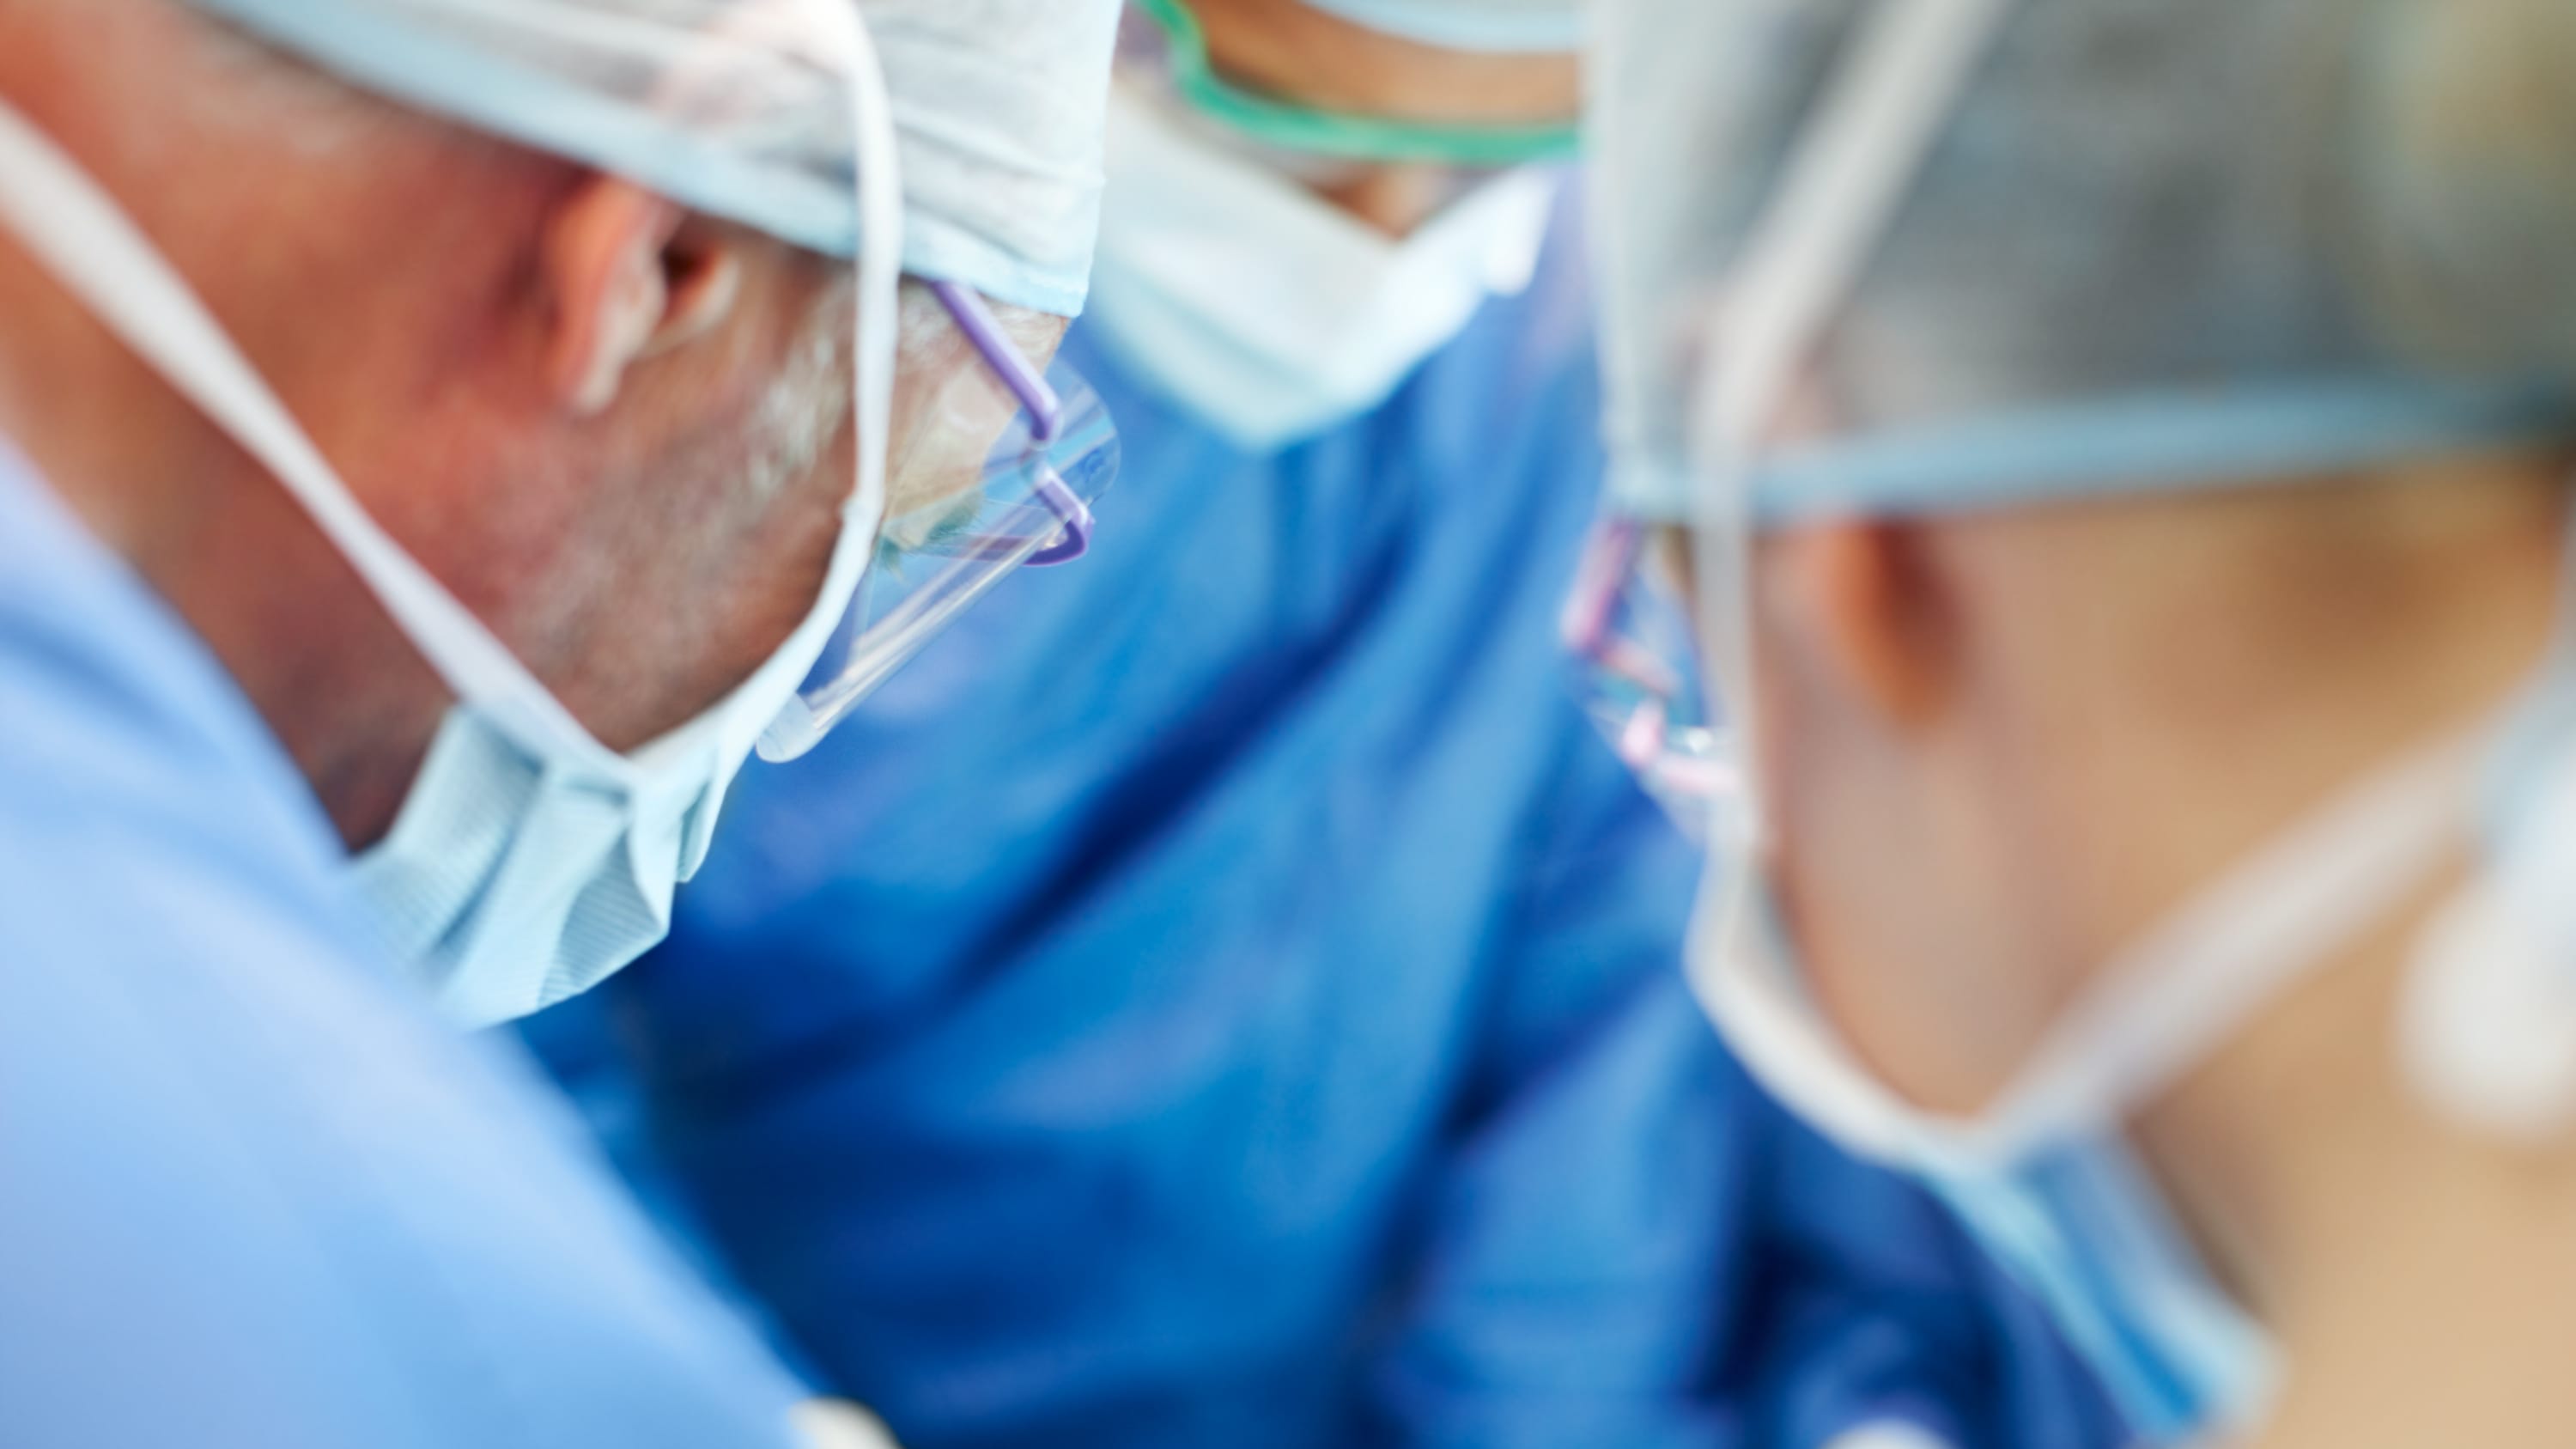 surgeons using minimally invasive techniques to treat aneurysm